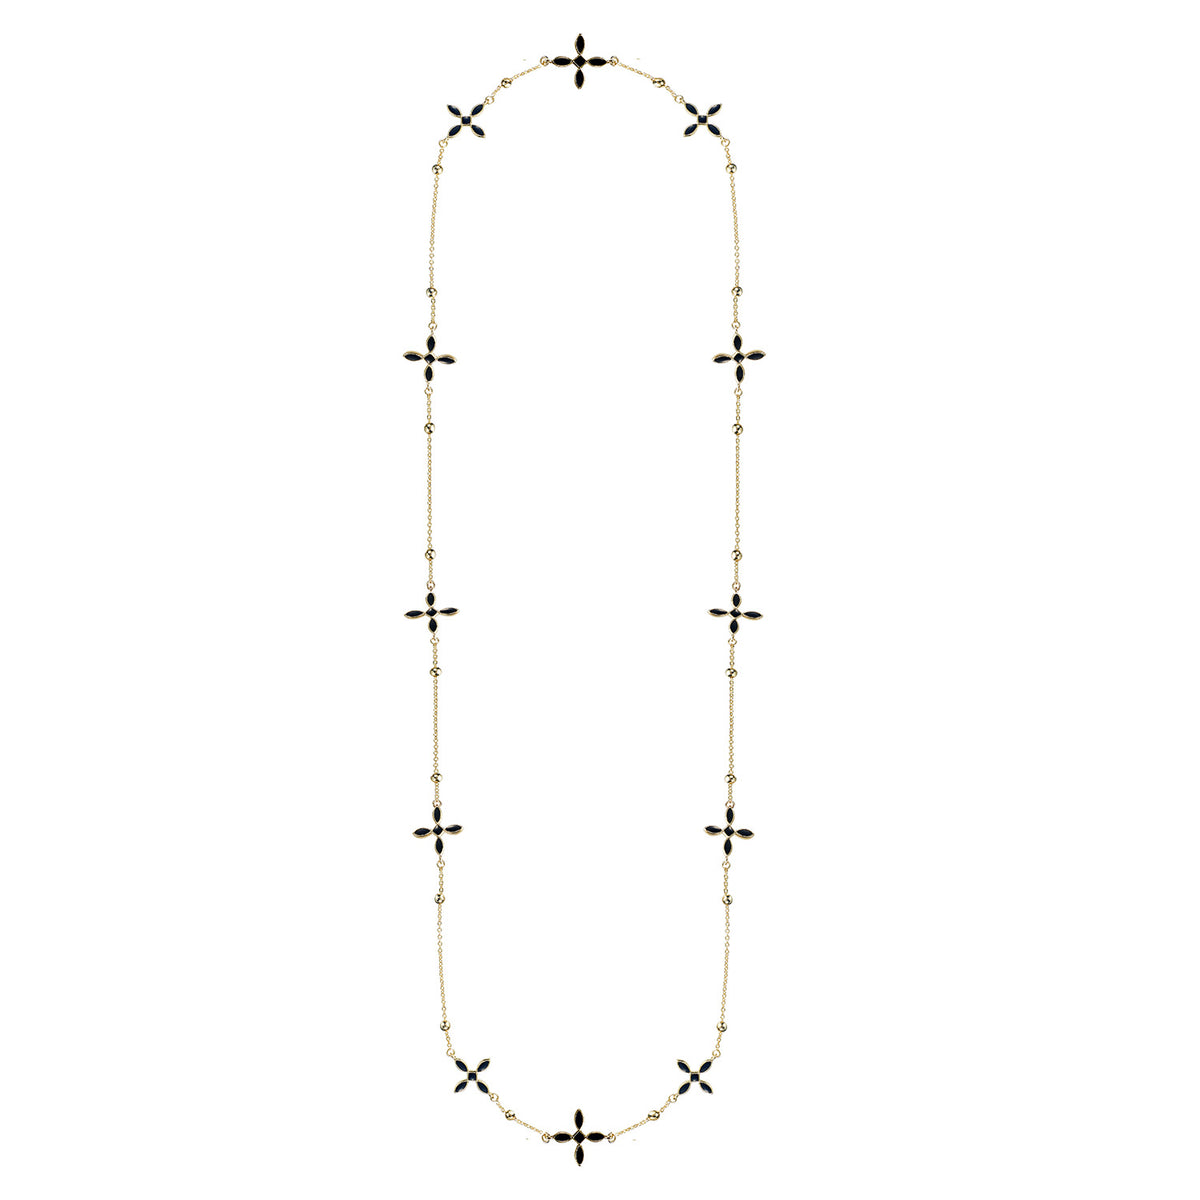 natalie wood designs cross station necklace